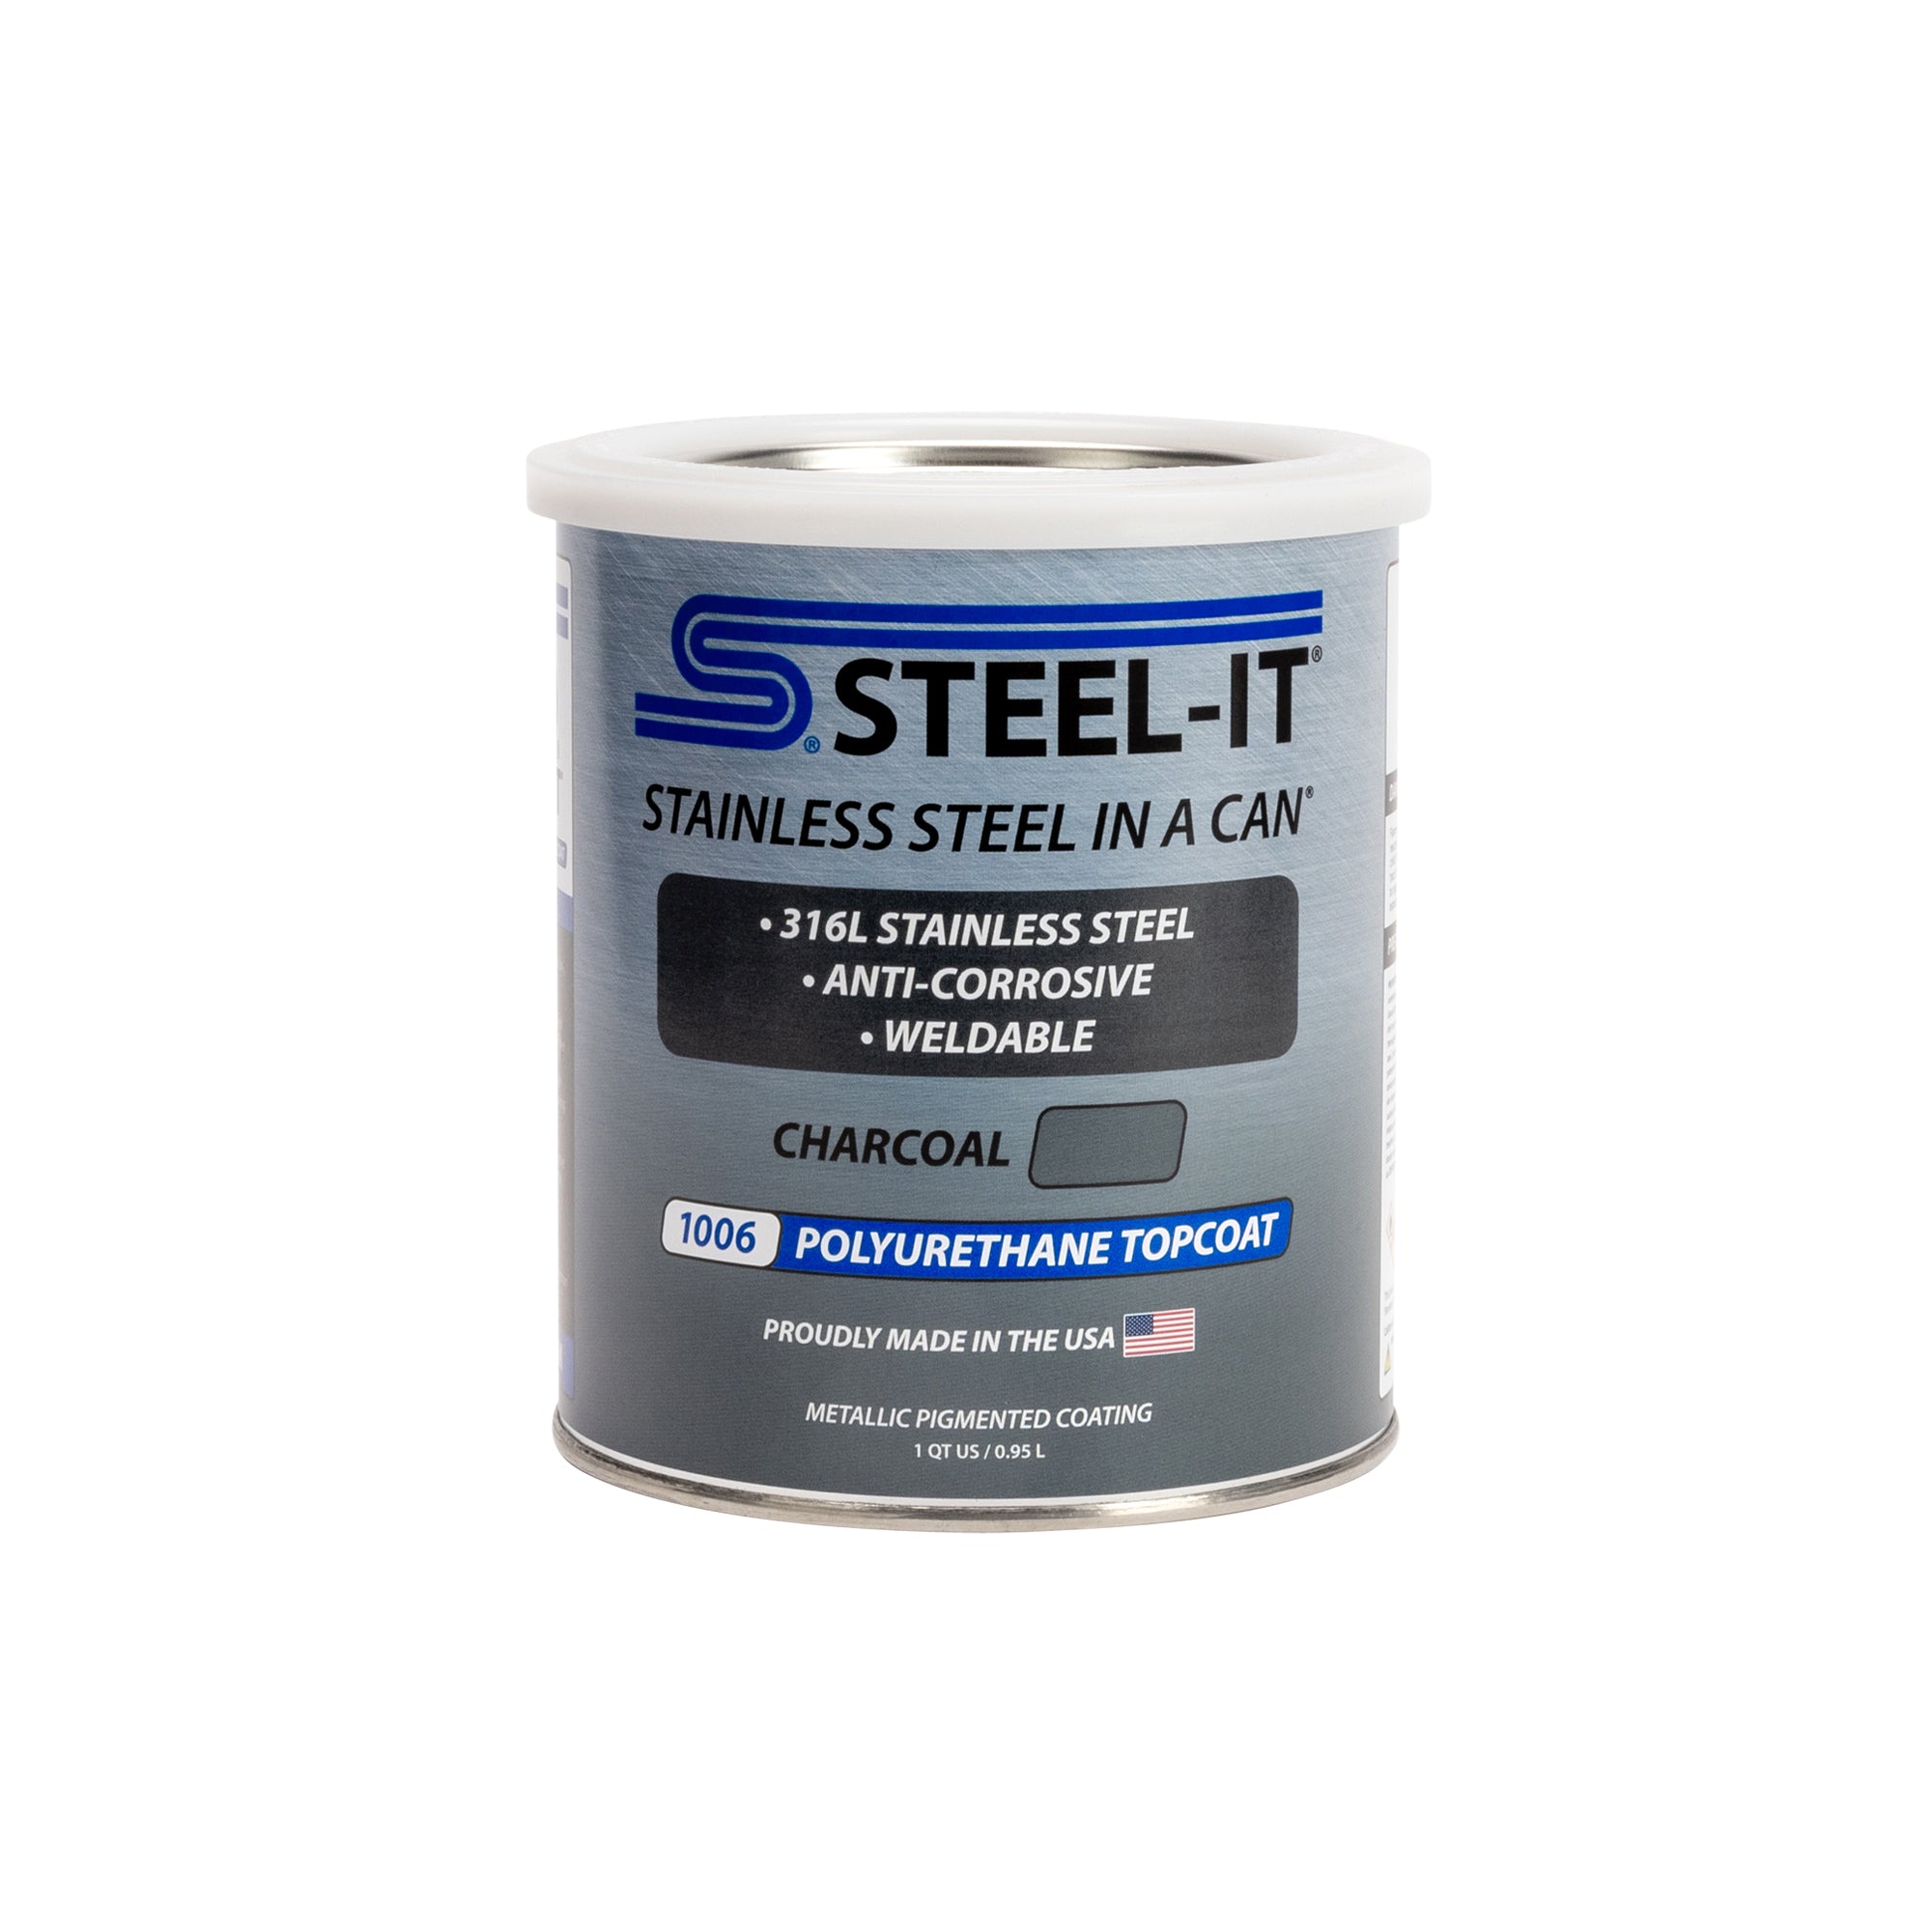 Steel-It Charcoal 1006 Polyurethane Topcoat (1 Quart/0.95L)